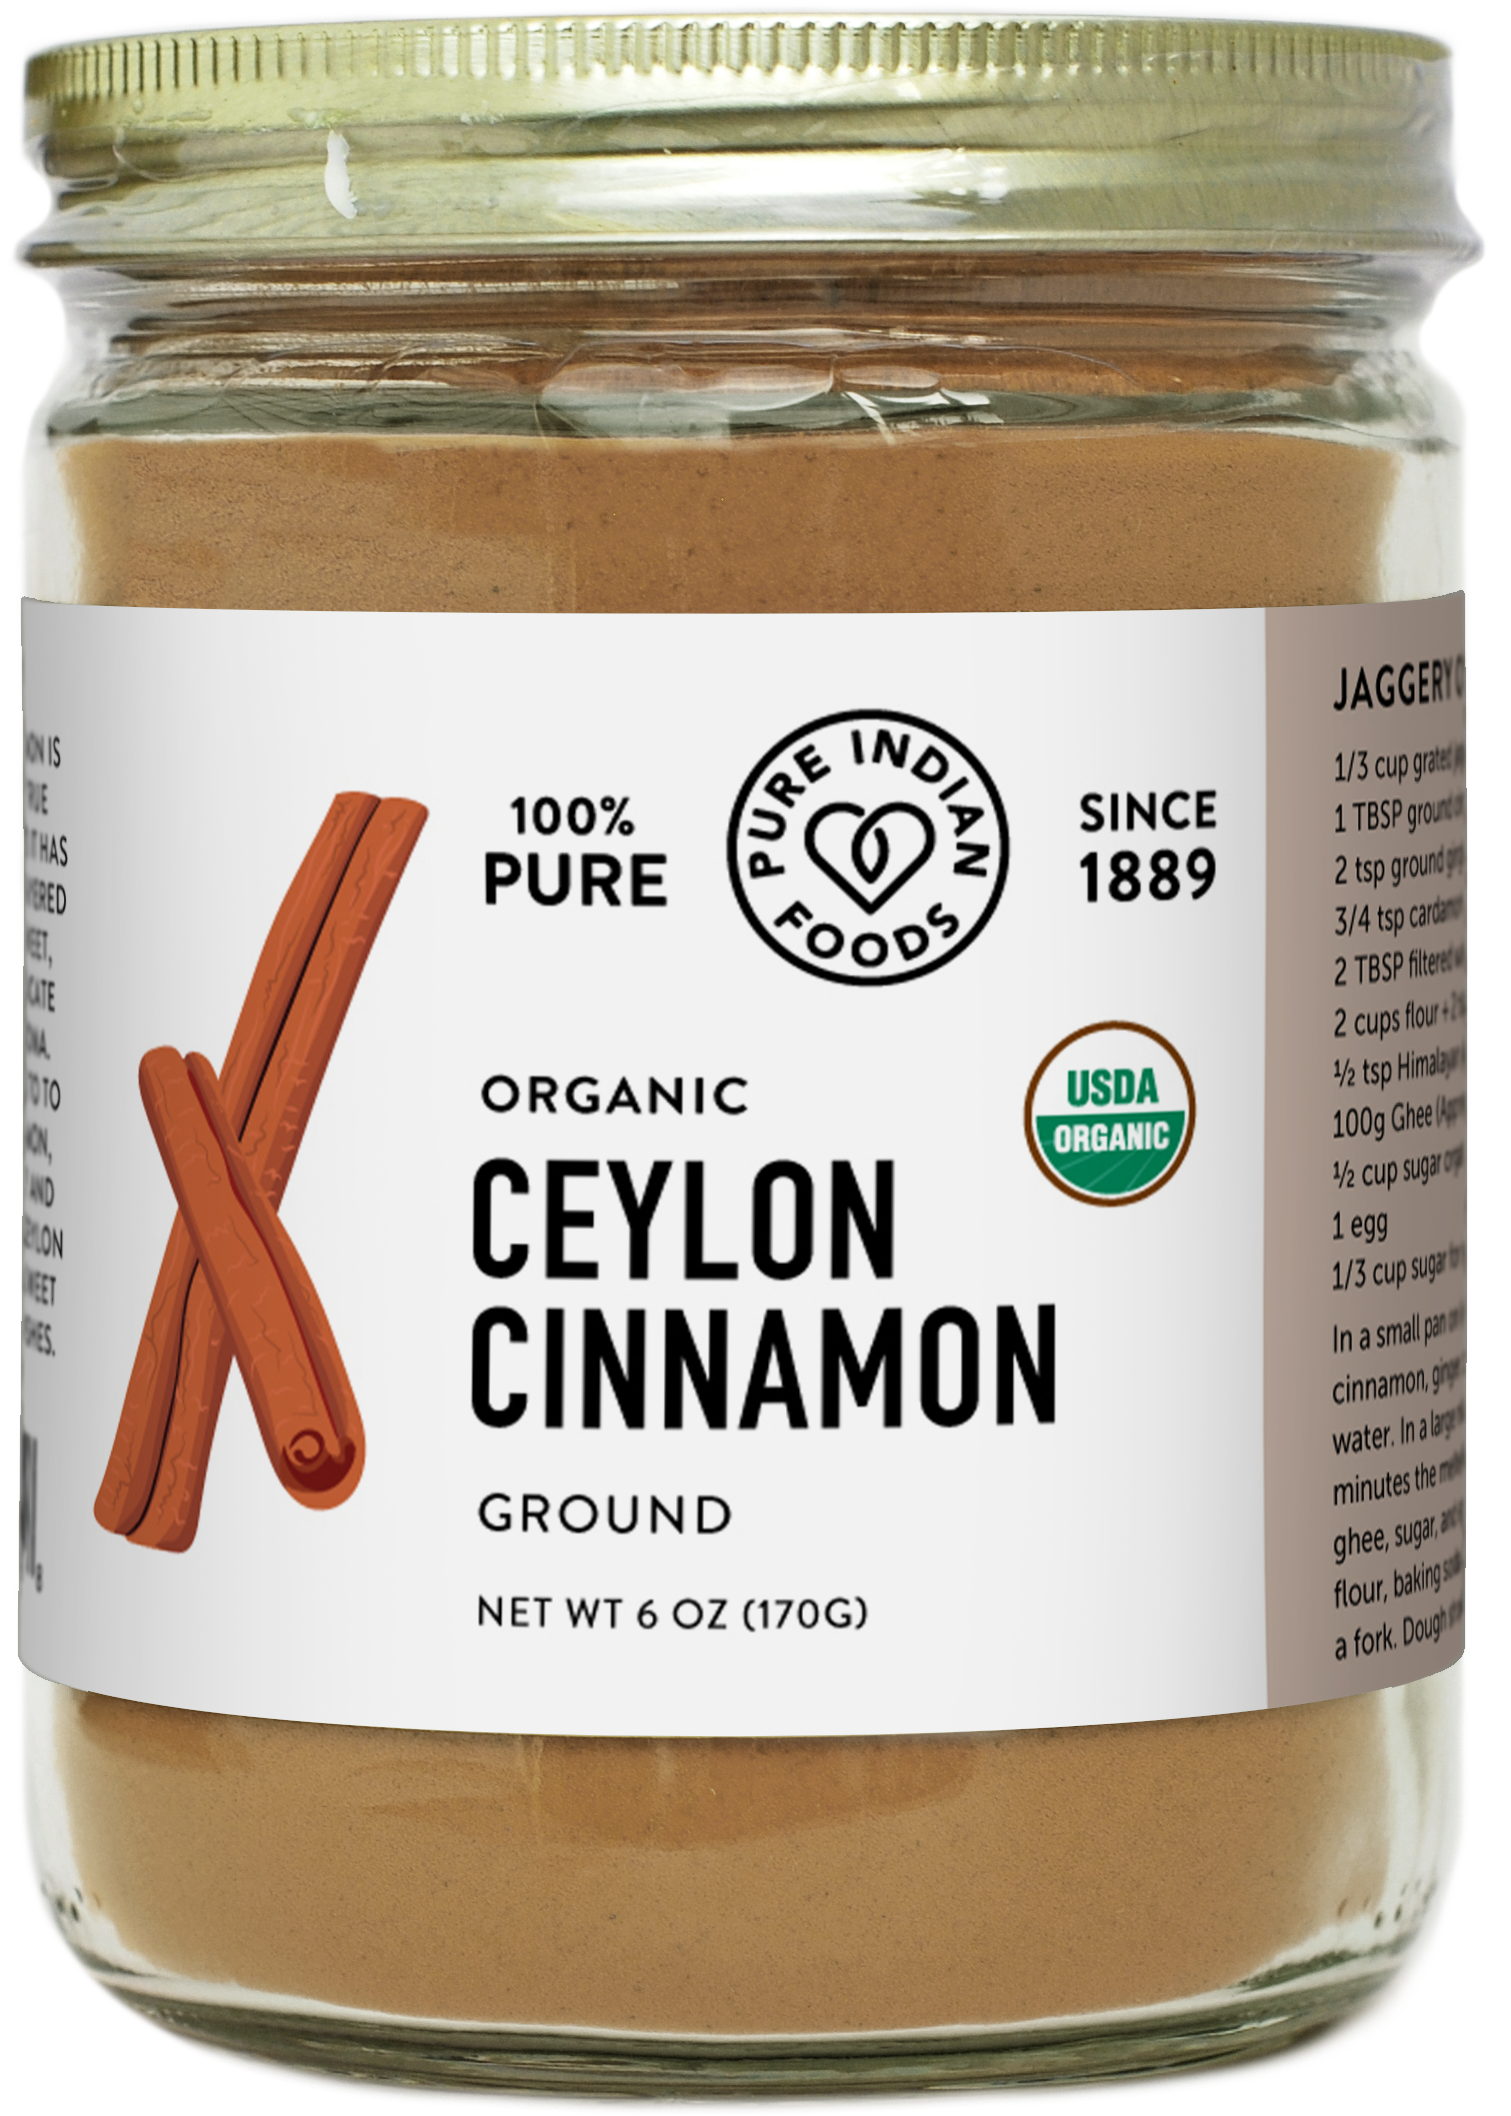 Large, 6 oz glass jar of Pure Indian Foods Organic Ceylon Cinnamon powder, freshly ground.